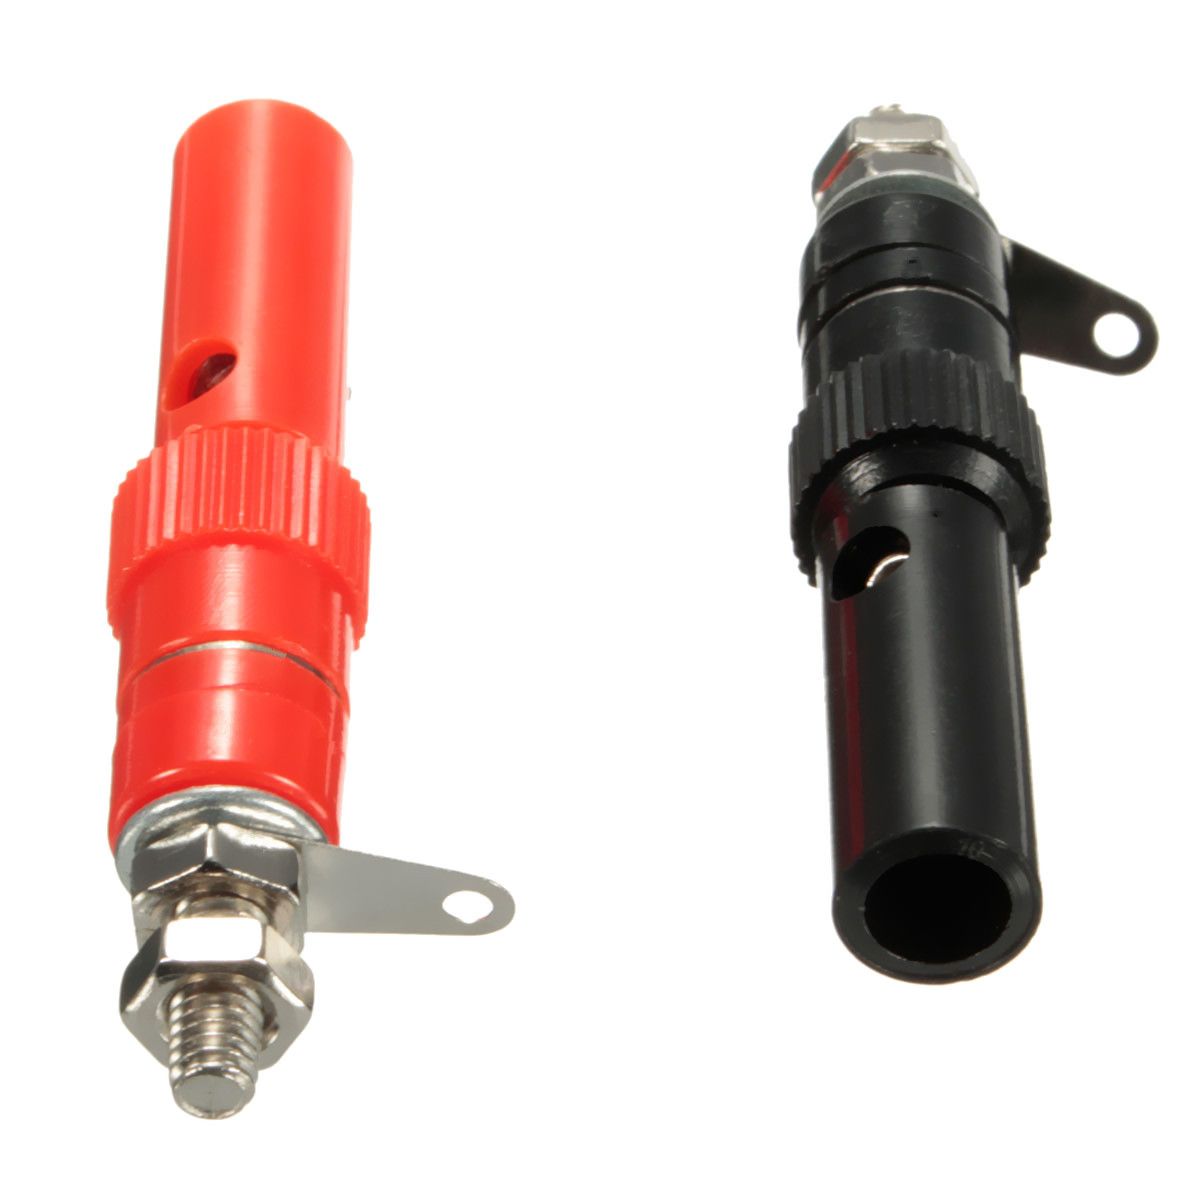 DANIU-10-Pairs-4mm-Terminal-Banana-Plug-Socket-Jack-Connectors-Instrument-Light-Tools-Black-and-Red-1046083